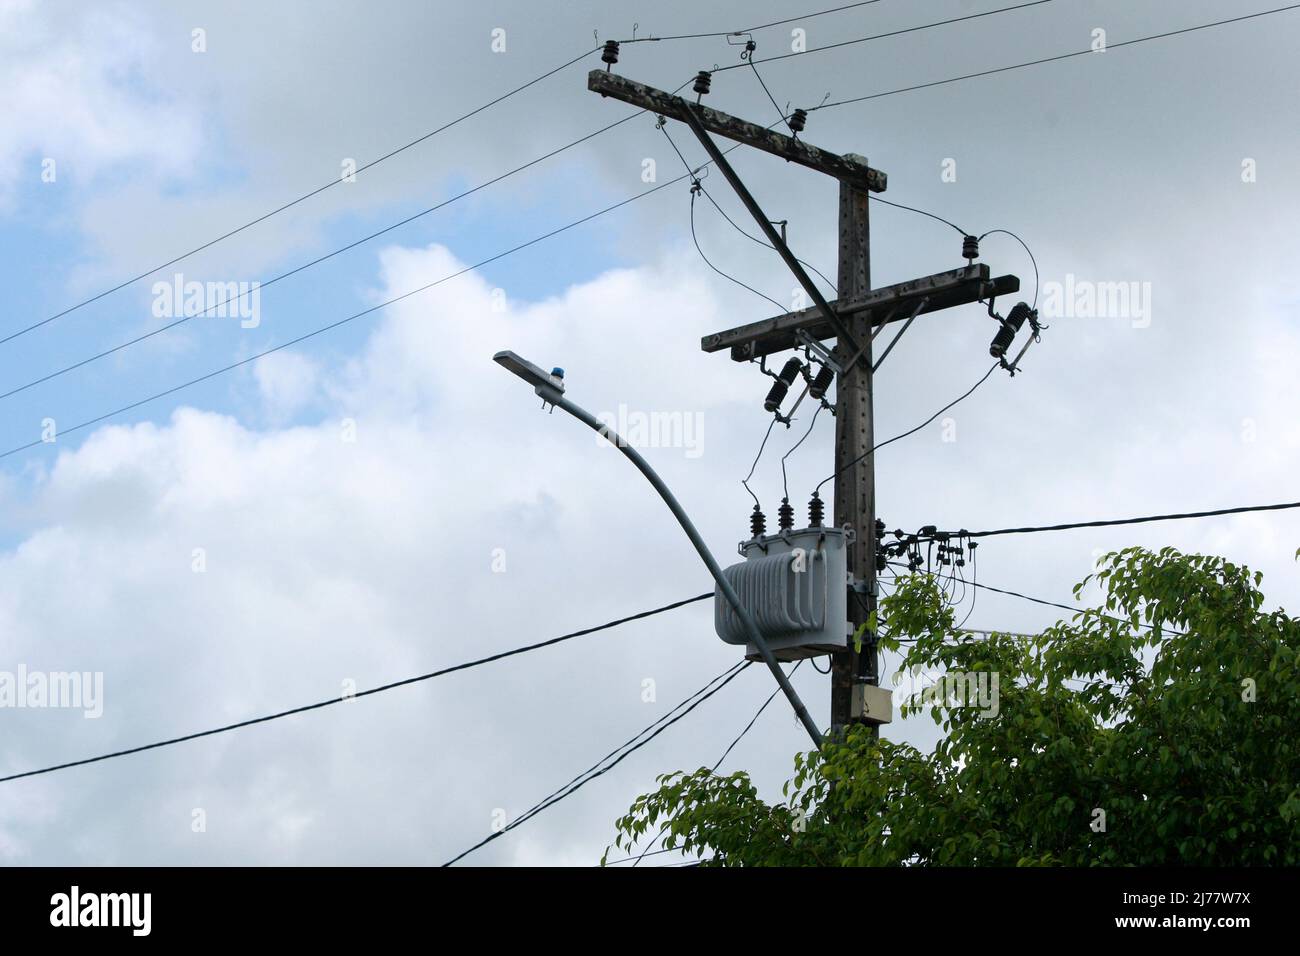 feira de santana, bahia, brazil - may 6, 2022: Electric network transformer is seen on a pole in the city of Feira de Santana. Stock Photo